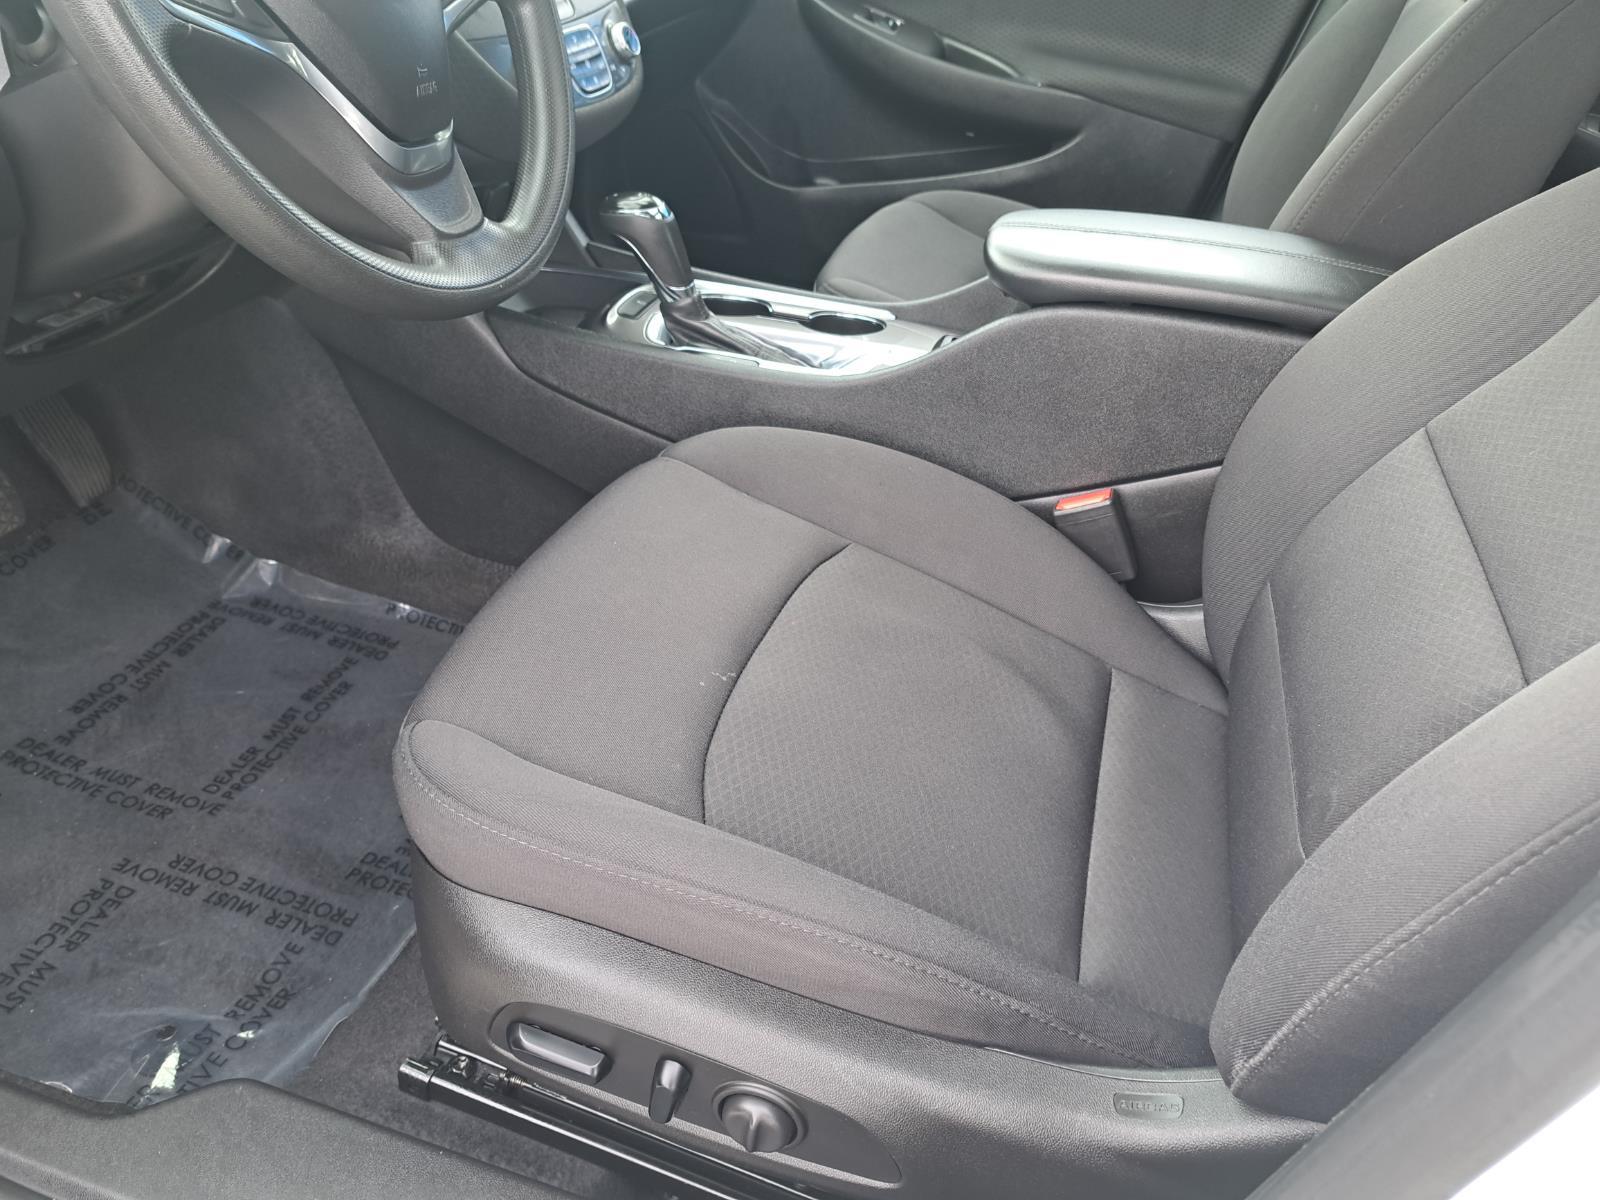 2019 Chevrolet Malibu LT Sedan 4 Dr. Front Wheel Drive 20